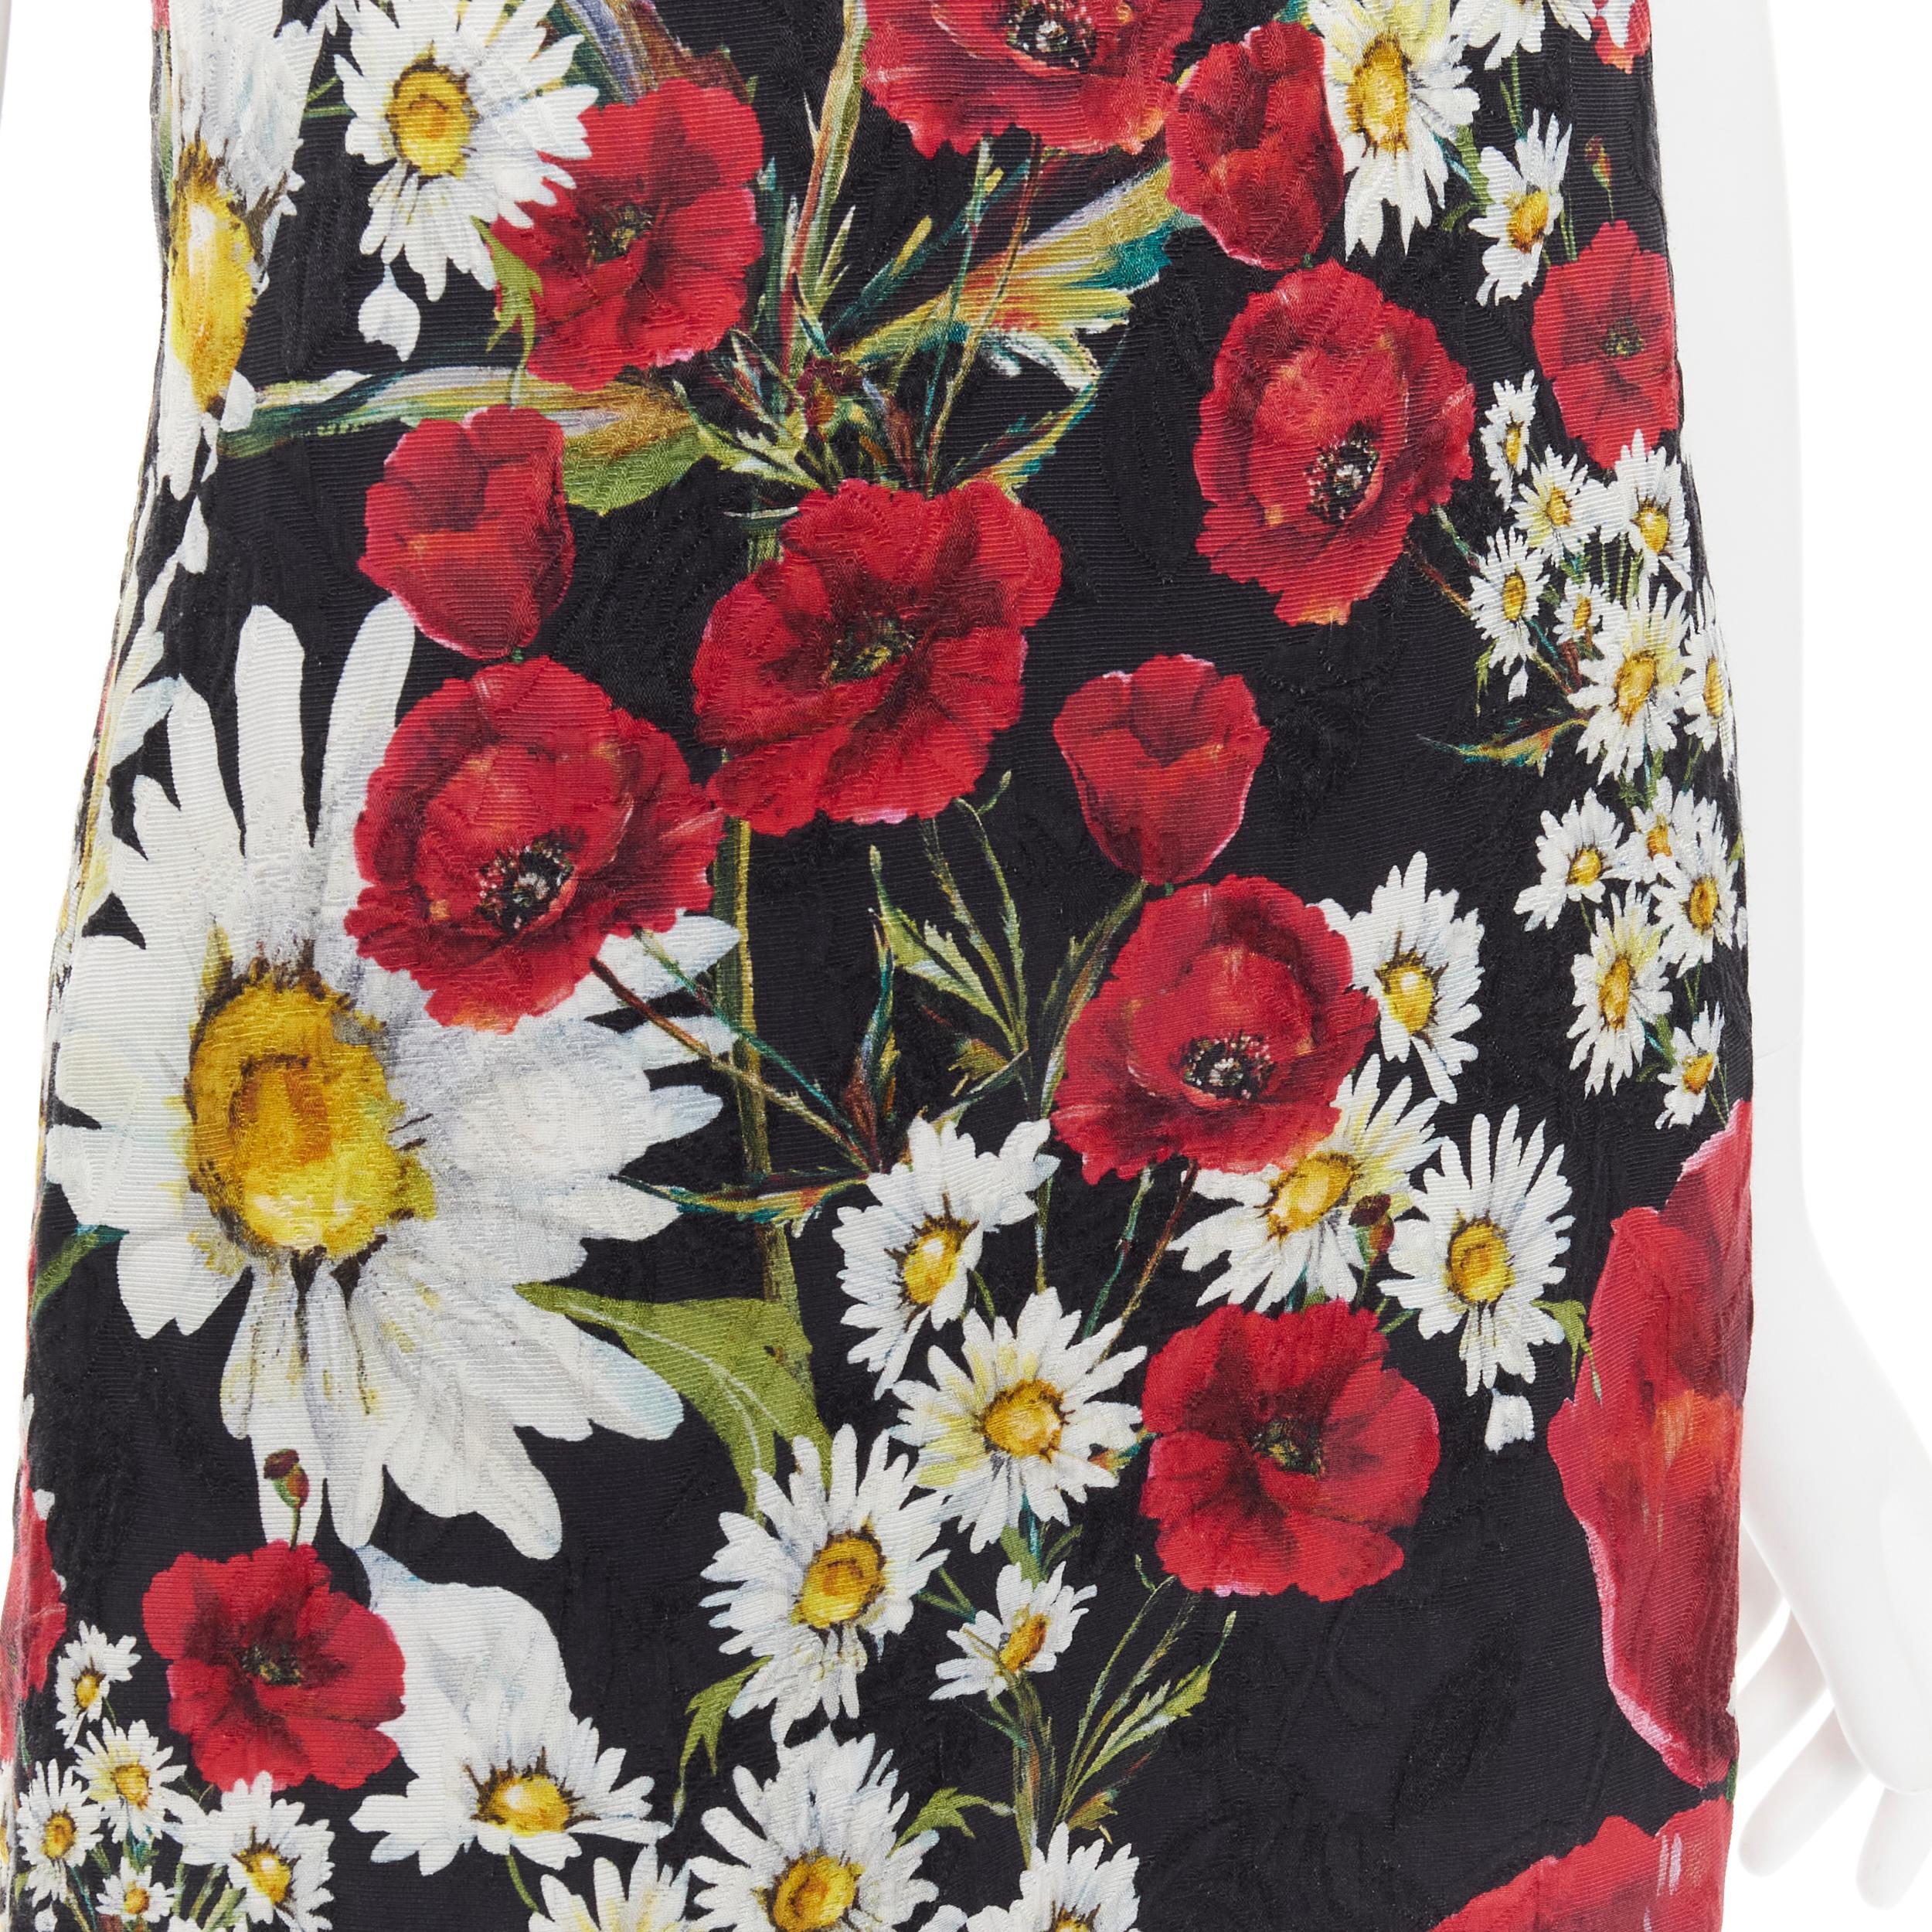 DOLCE GABBANA Poppy Daisy floral print jacquard mini sheath dress IT36 XS For Sale 1